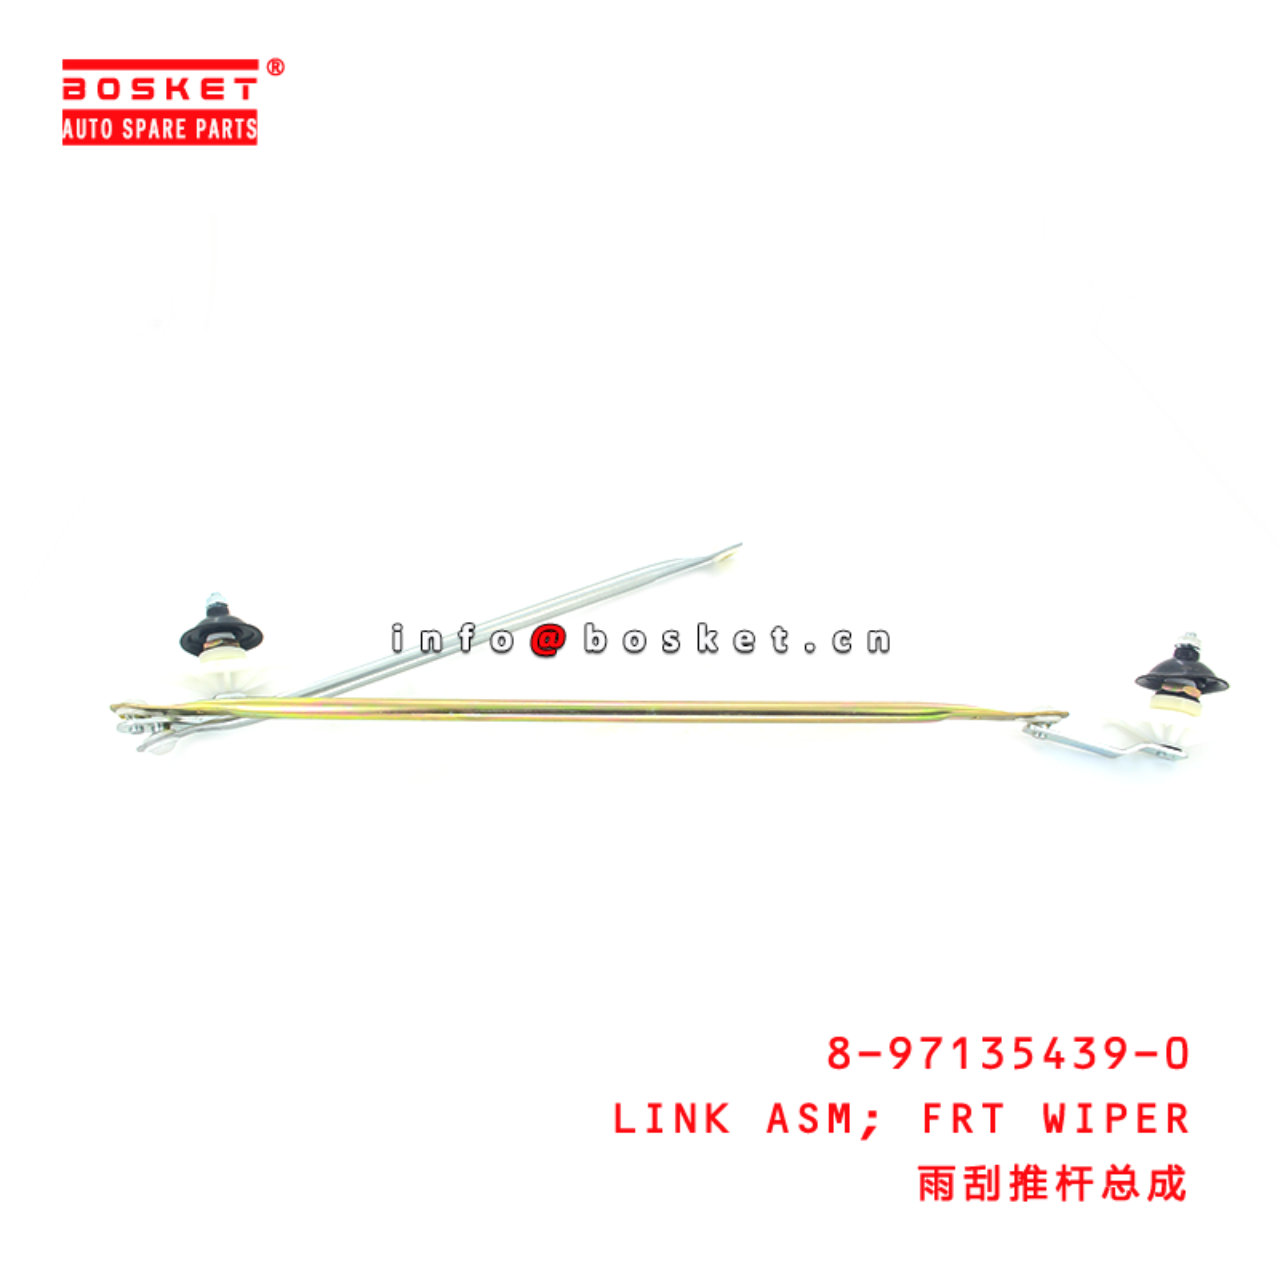 8-97357027-0 Antenna 8973570270 Suitable for ISUZU D-MAX - For ISUZU D-MAX  Parts - BOSKET INDUSTRIAL LTD